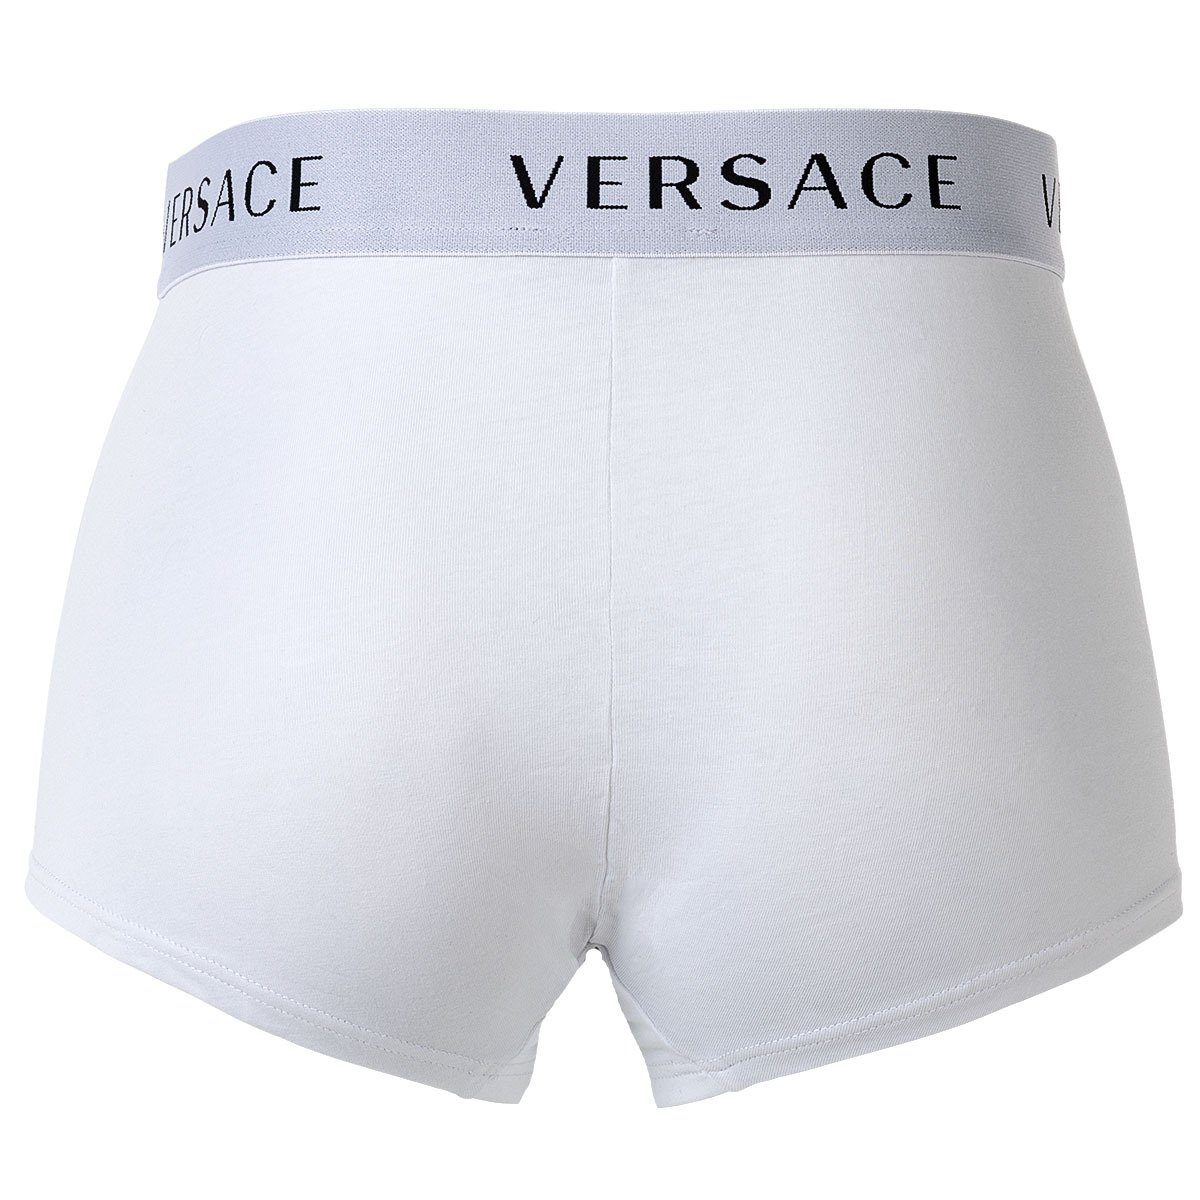 Versace Boxer Weiß/Blau - Herren Boxer Trunk Shorts, 2er Pack